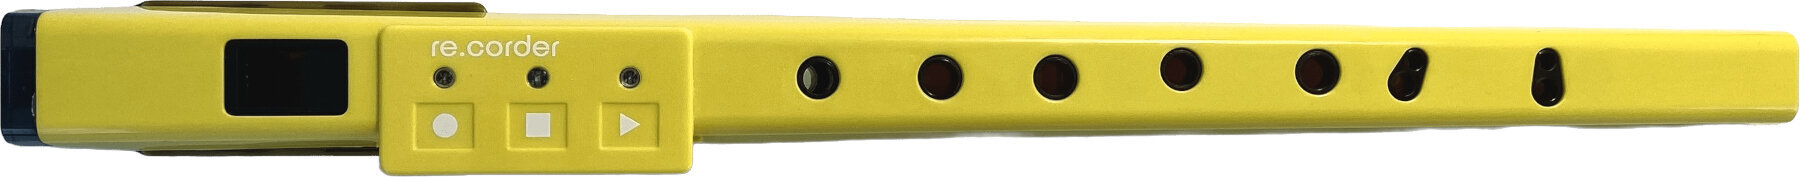 Hybrid Wind Instrument Artinoise Re.corder Yellow Hybrid Wind Instrument